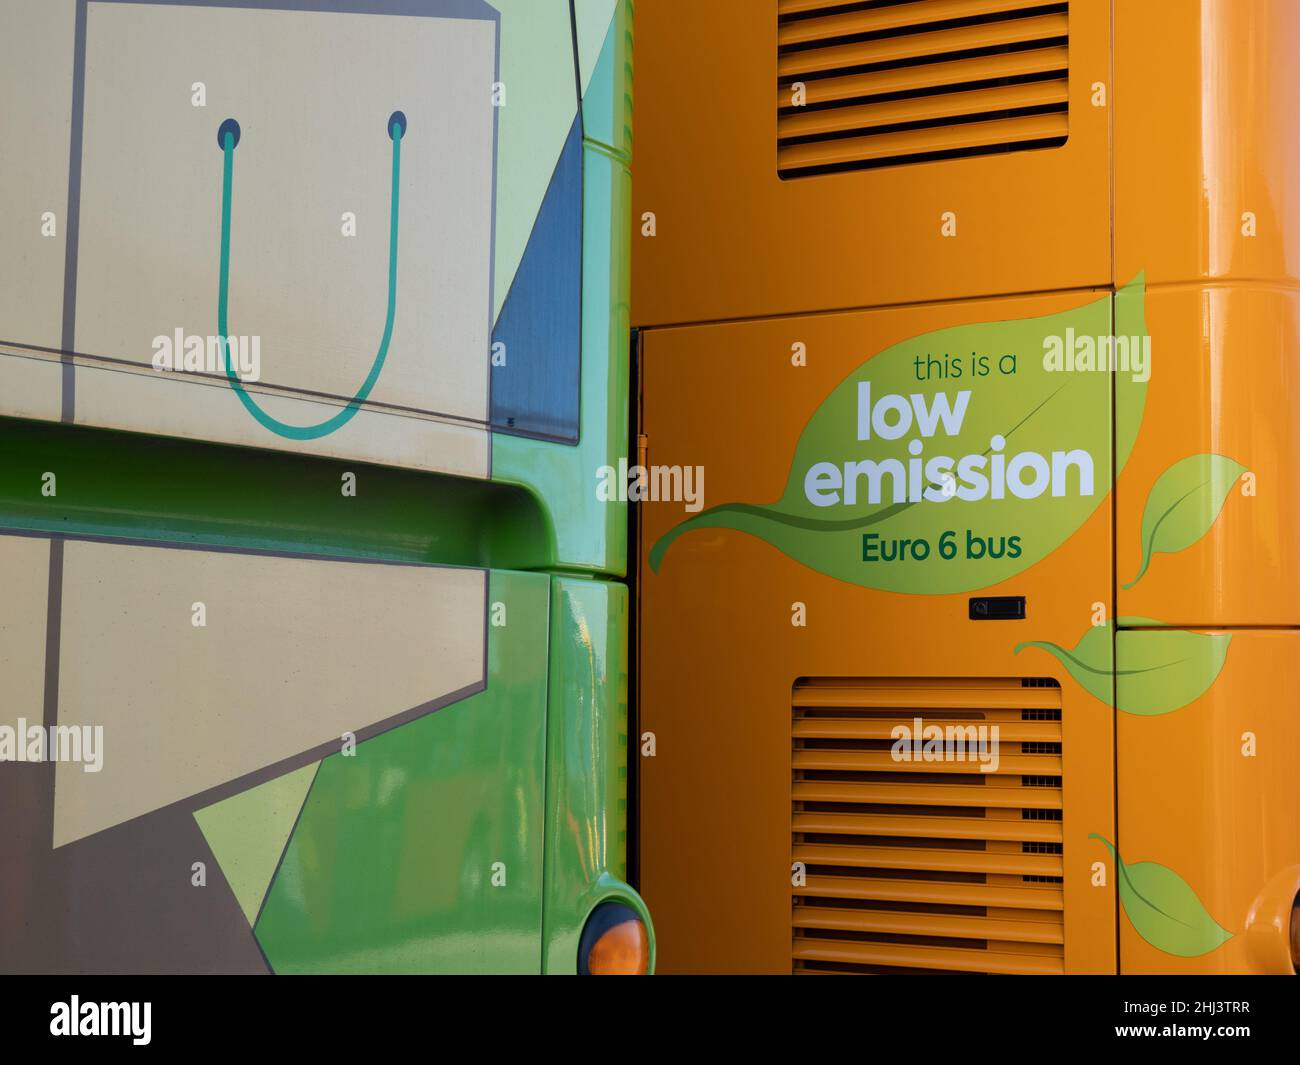 Low Emission bus, detail / branding Stock Photo